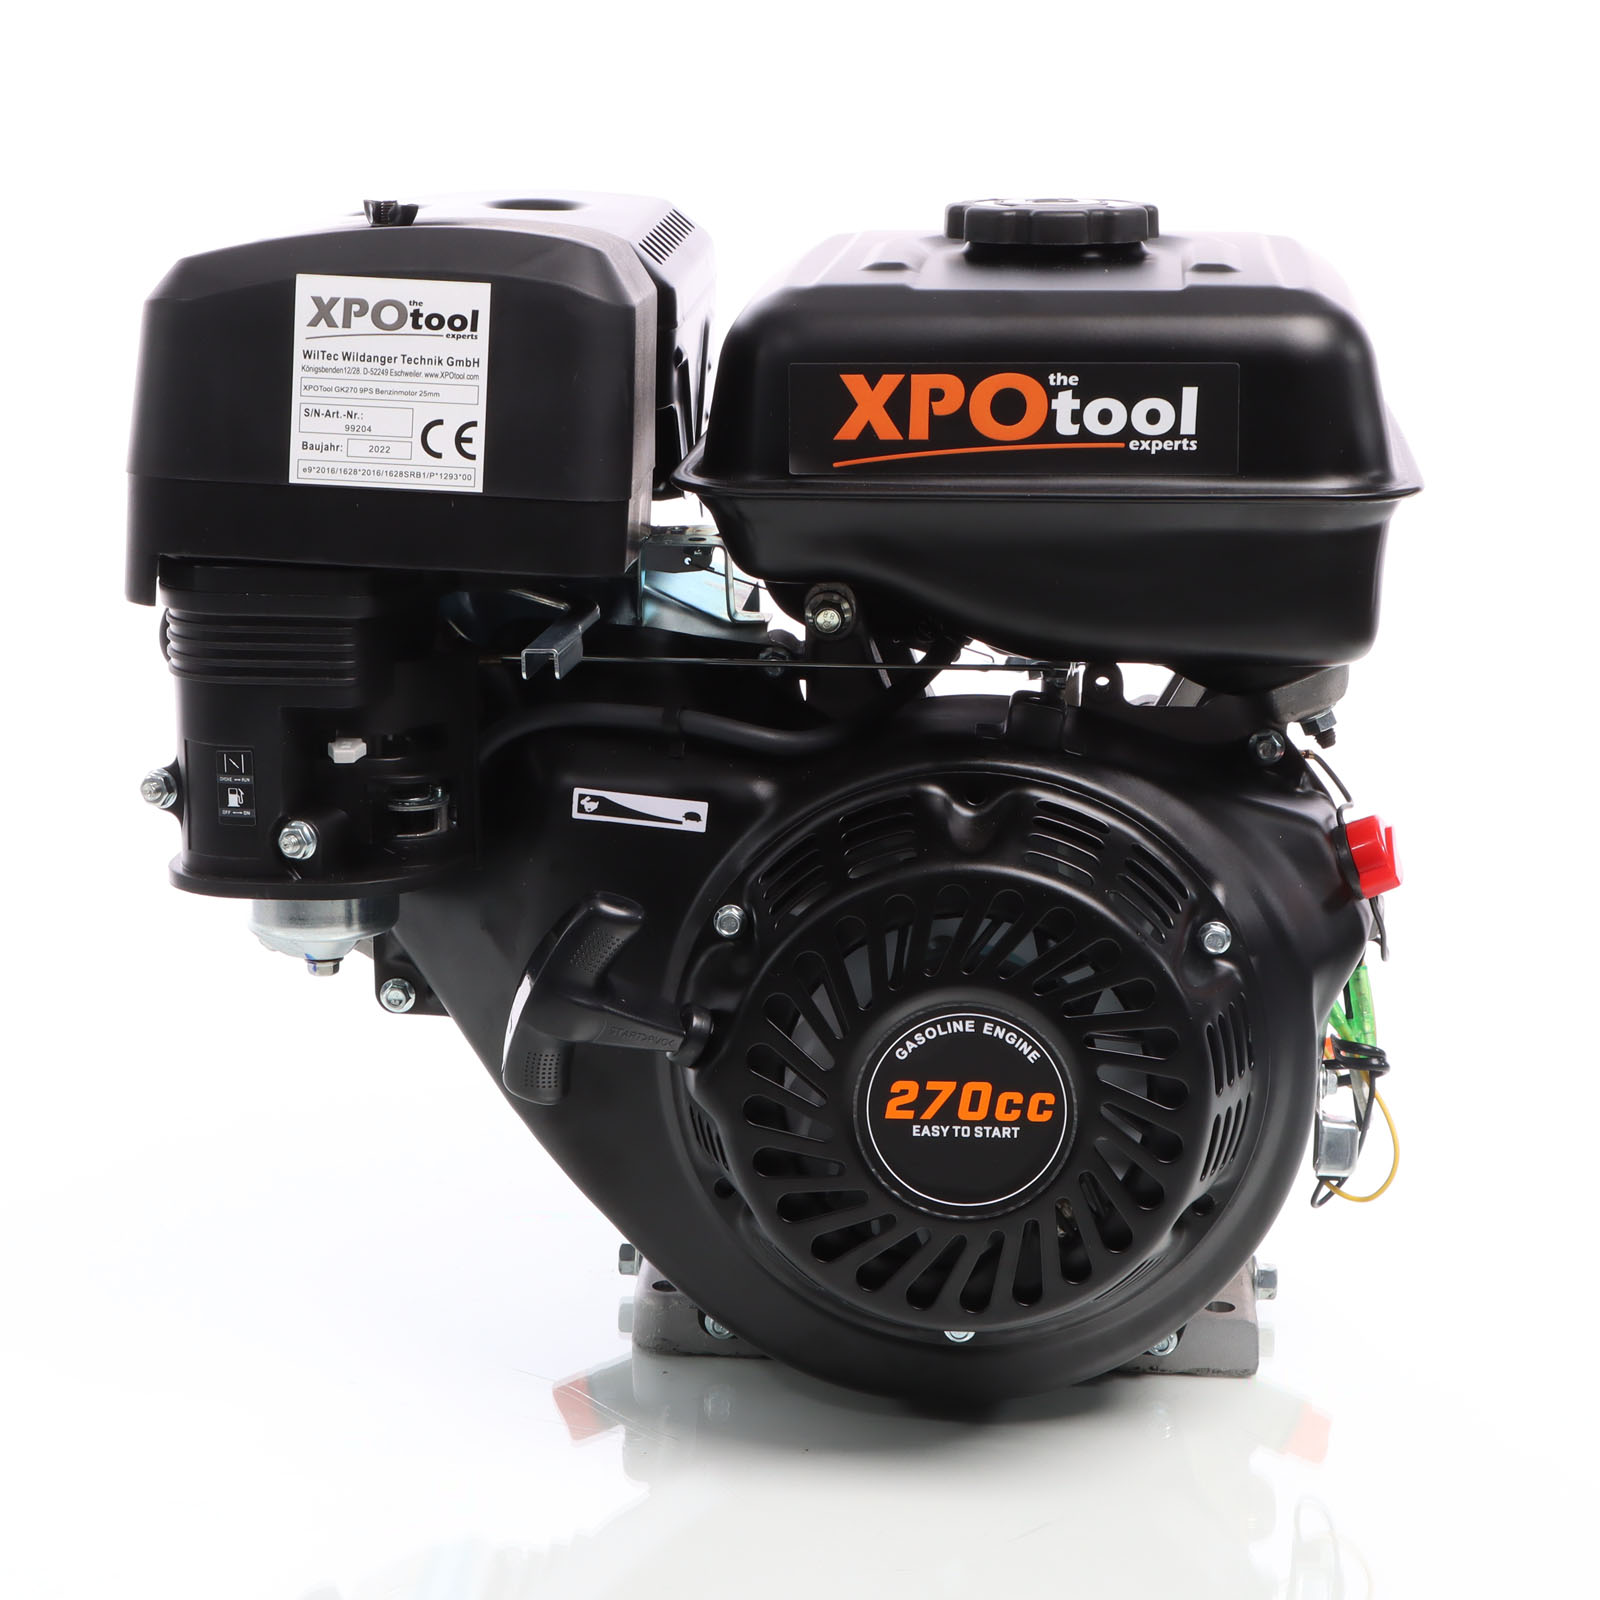 XPOtool GK270 Benzinmotor 5,8 kW (9 PS) 25mm Zapfwelle Reversierstart